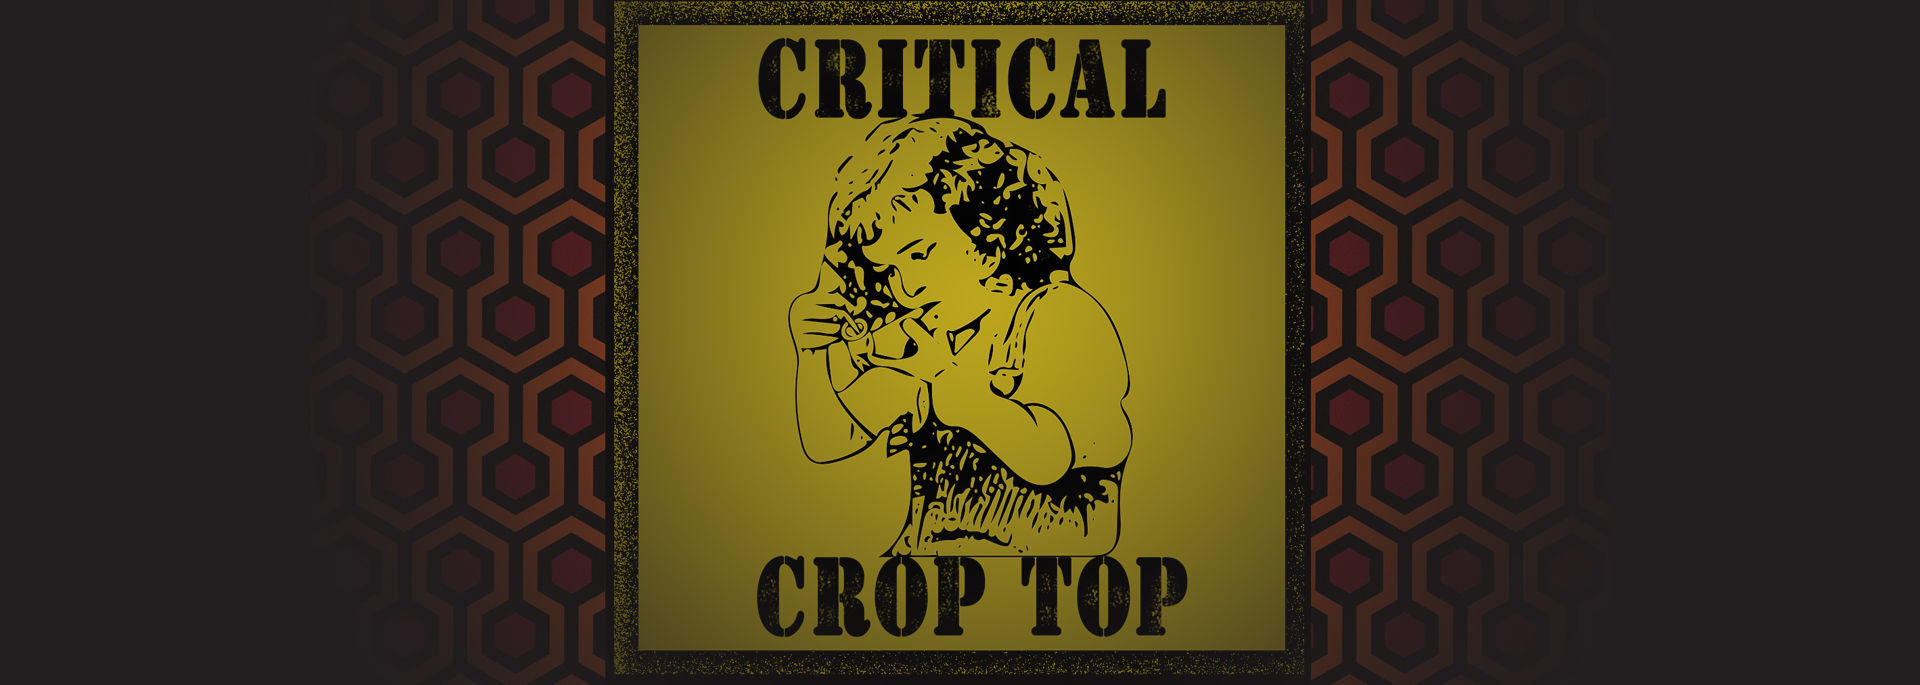 Critical Crop Top  channel